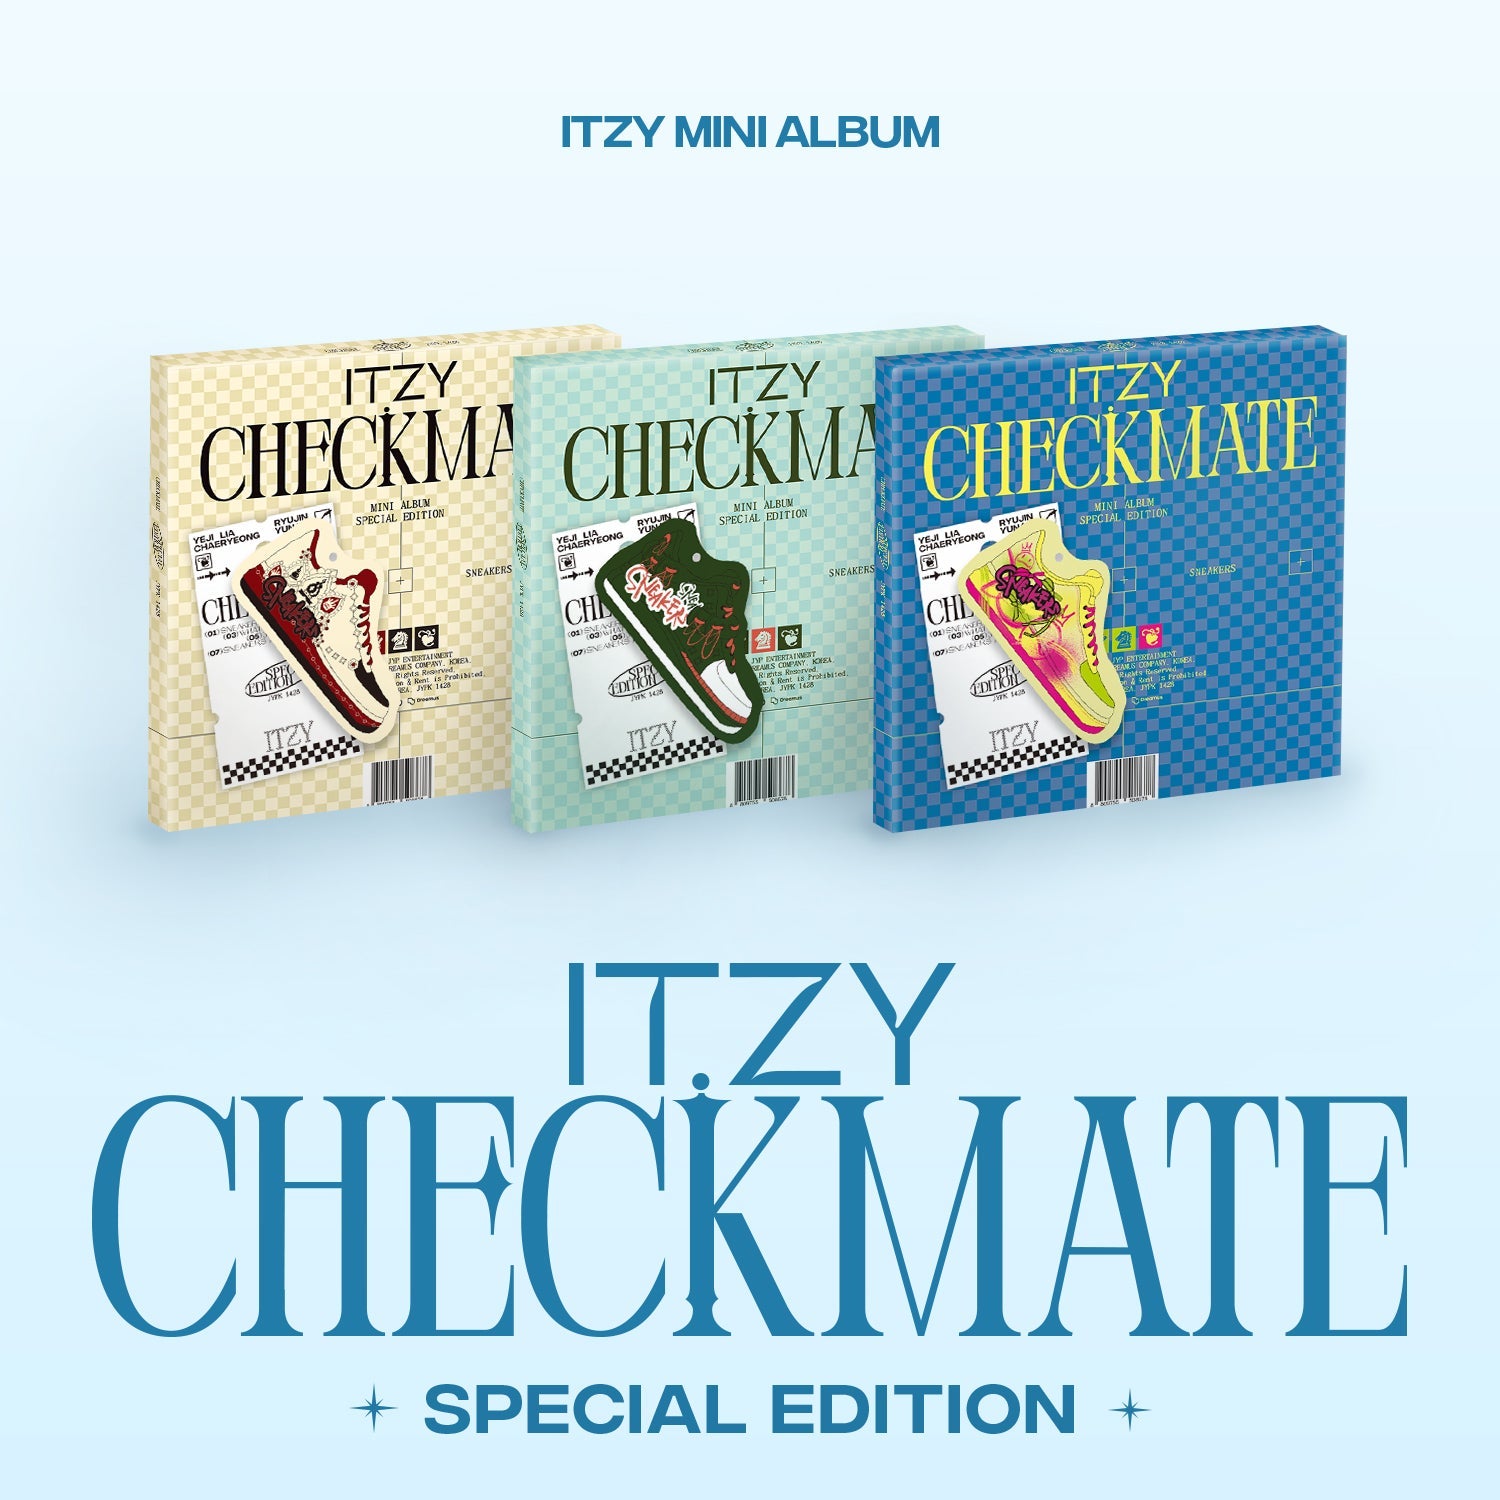 ITZY MINI ALBUM 'CHECKMATE' (SPECIAL EDITION) COVER